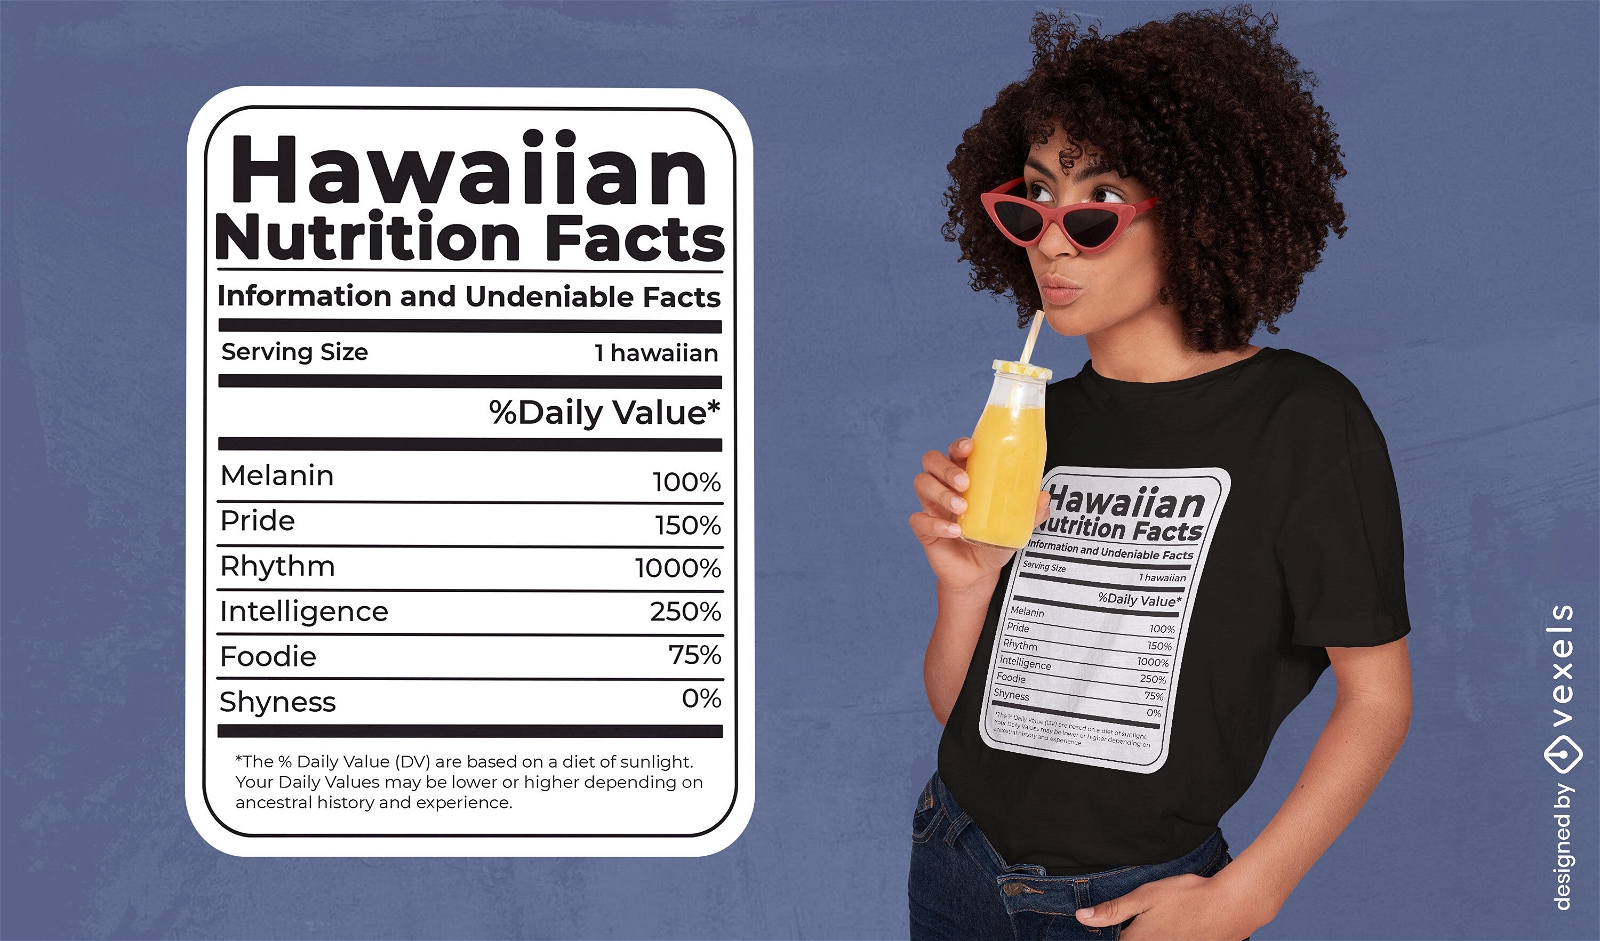 Dise?o de camiseta de informaci?n nutricional hawaiana.